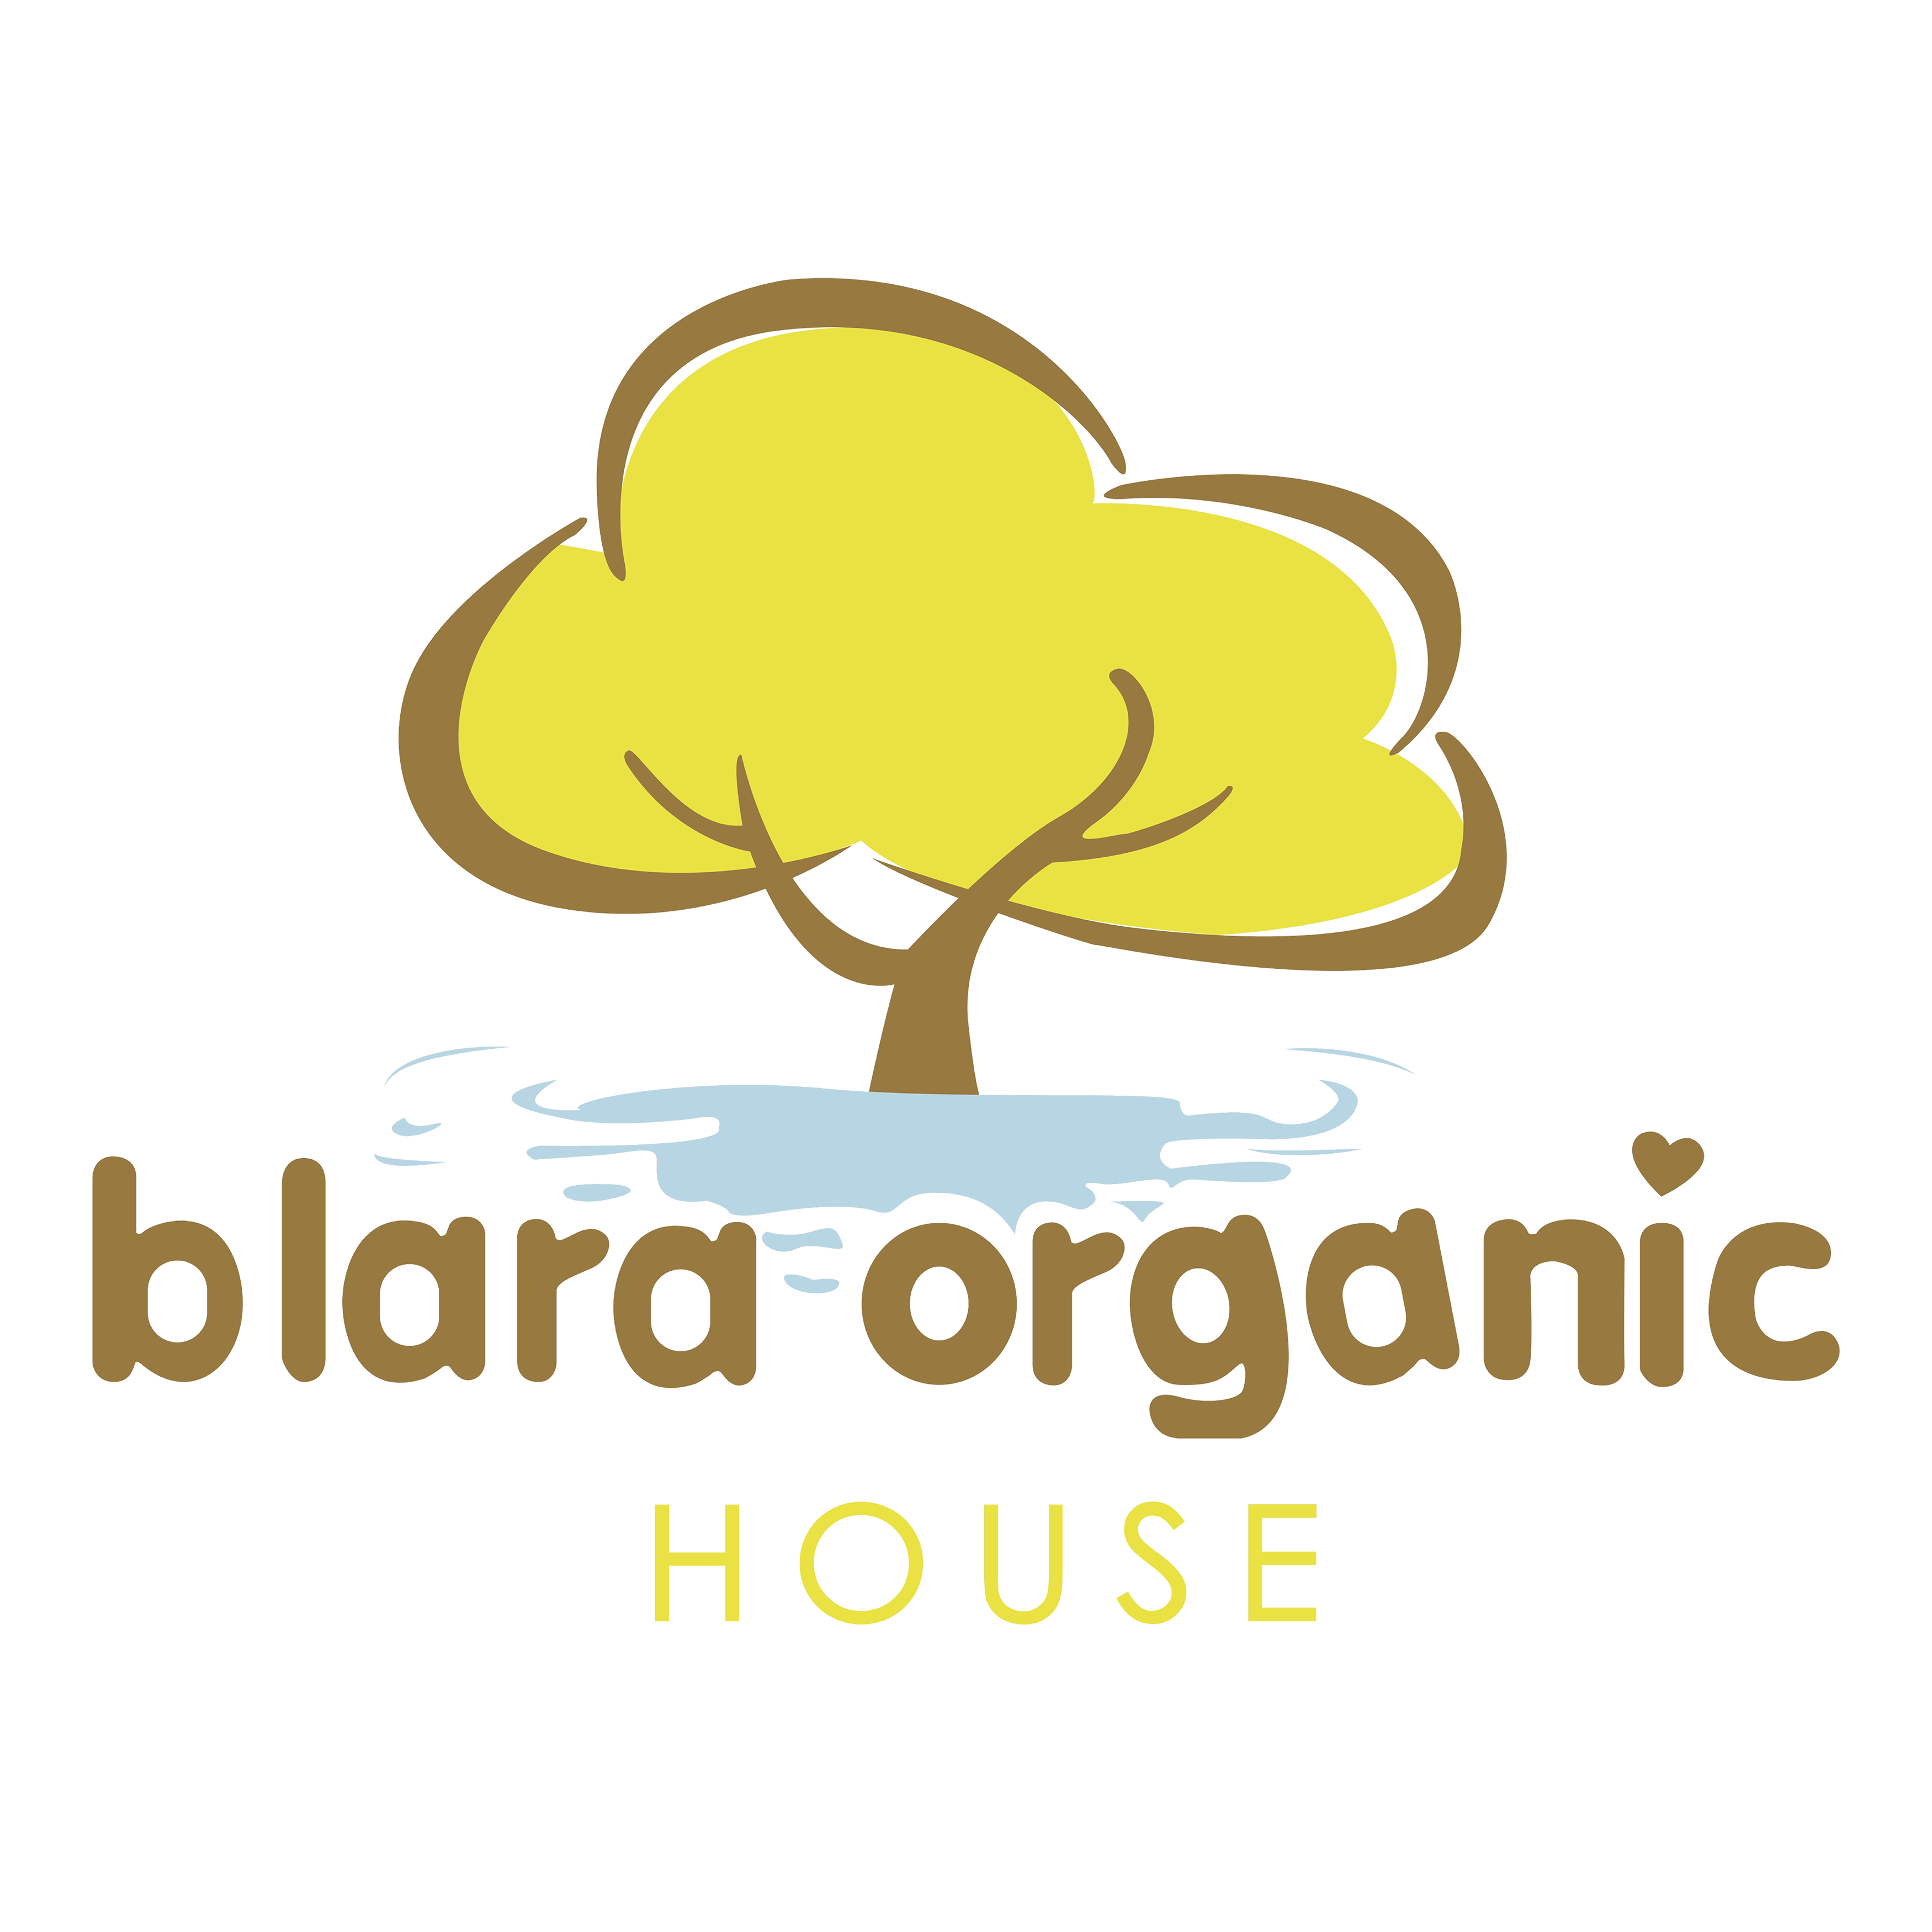 Blara Organic House